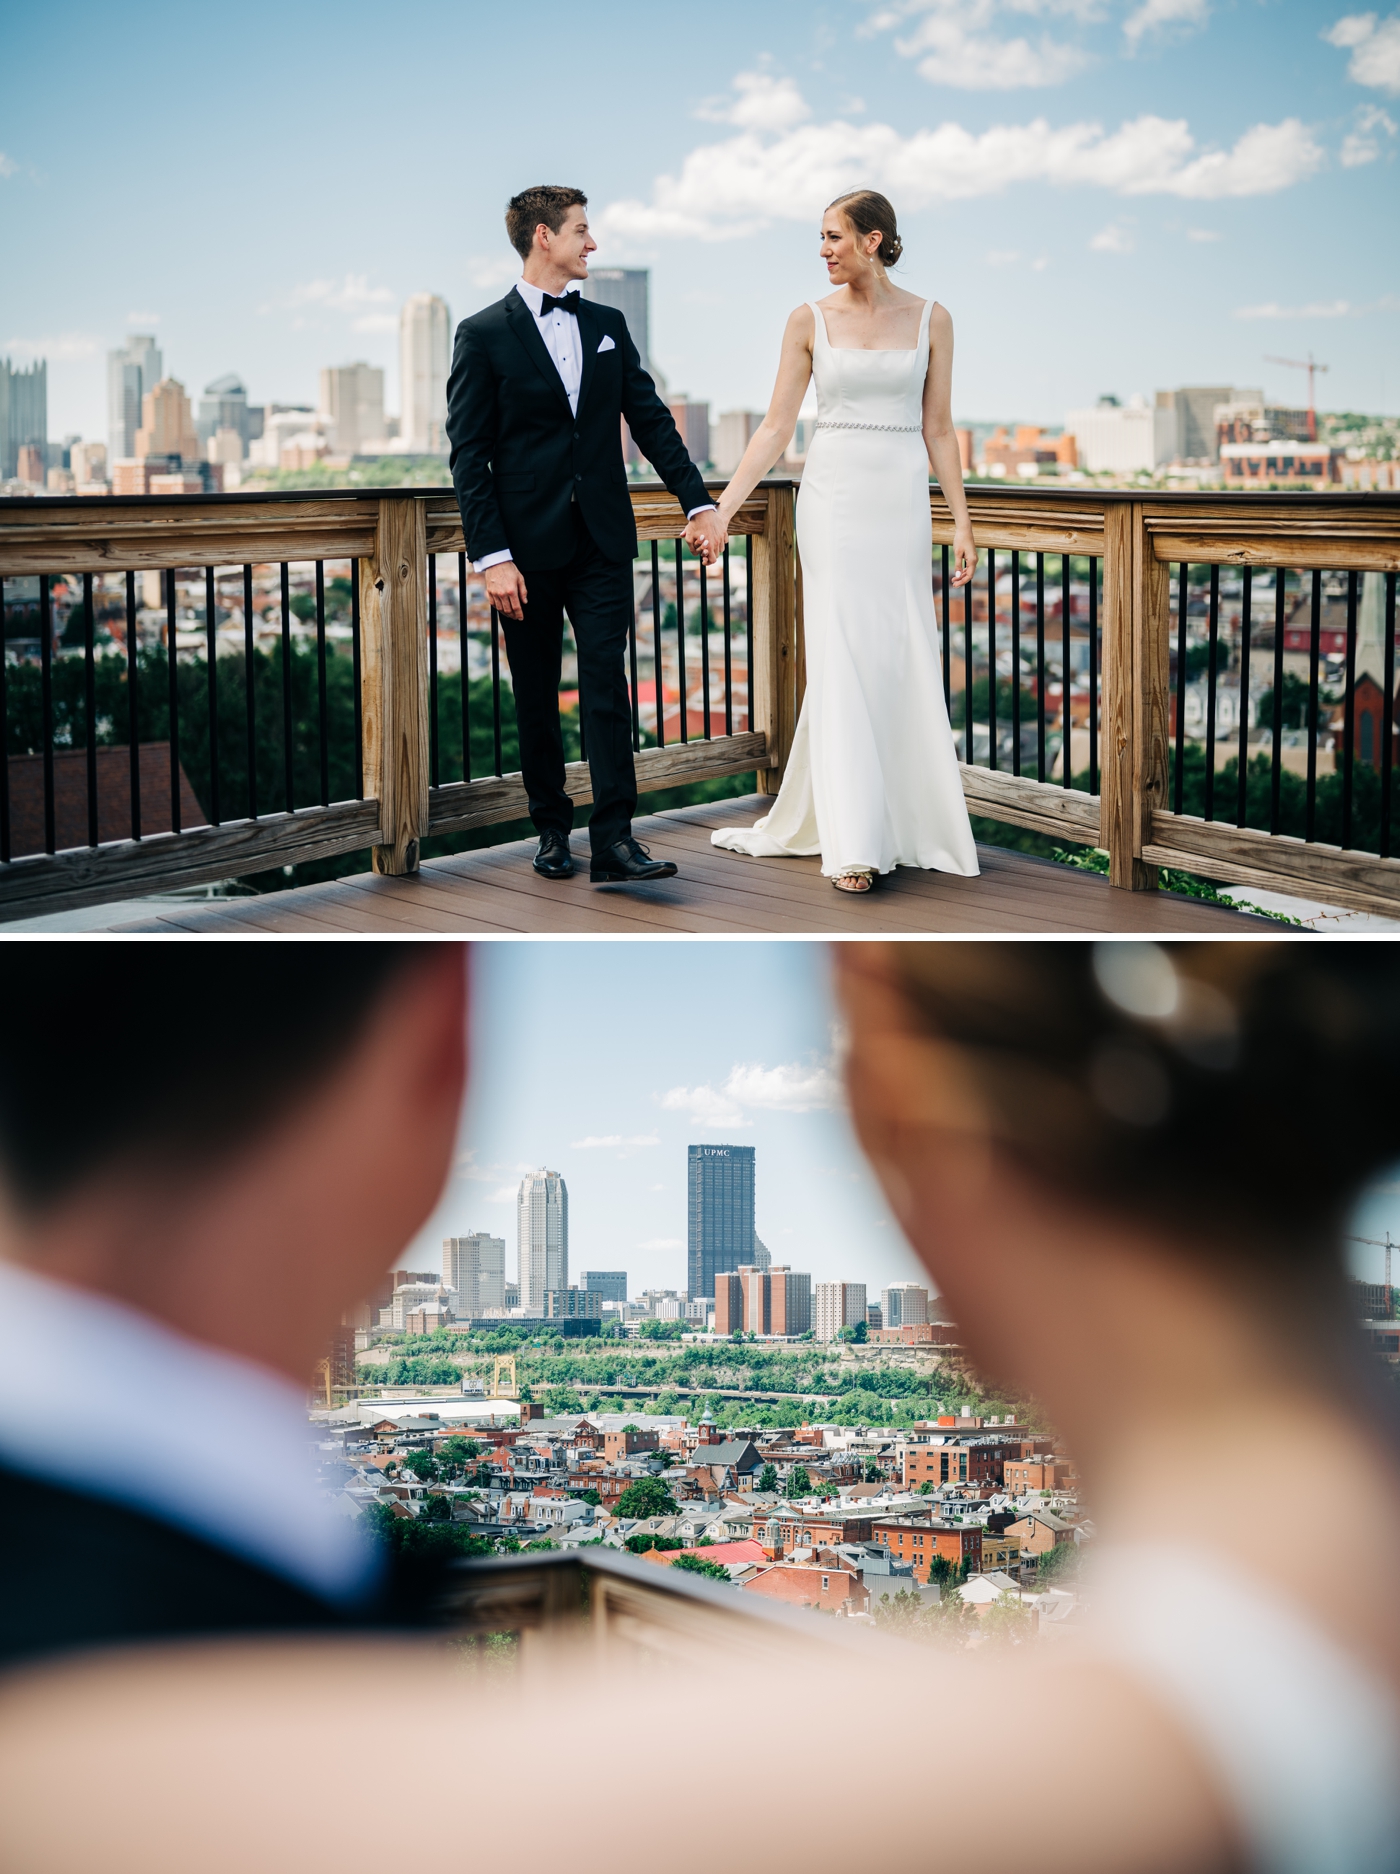 Bride and groom rooftop wedding portraits overlooking Pittsburg